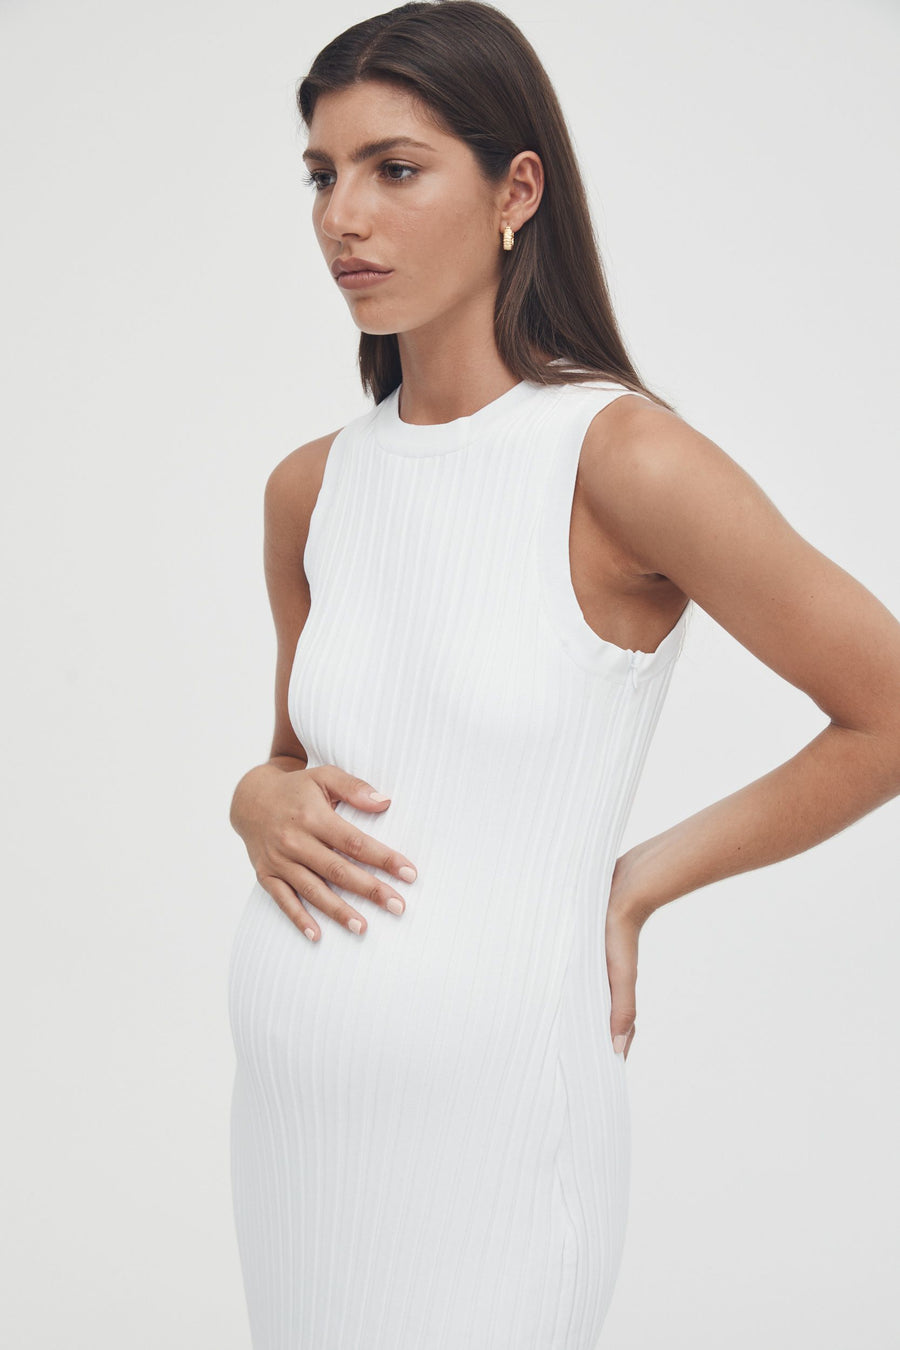 Babyshower Dress (White) 4